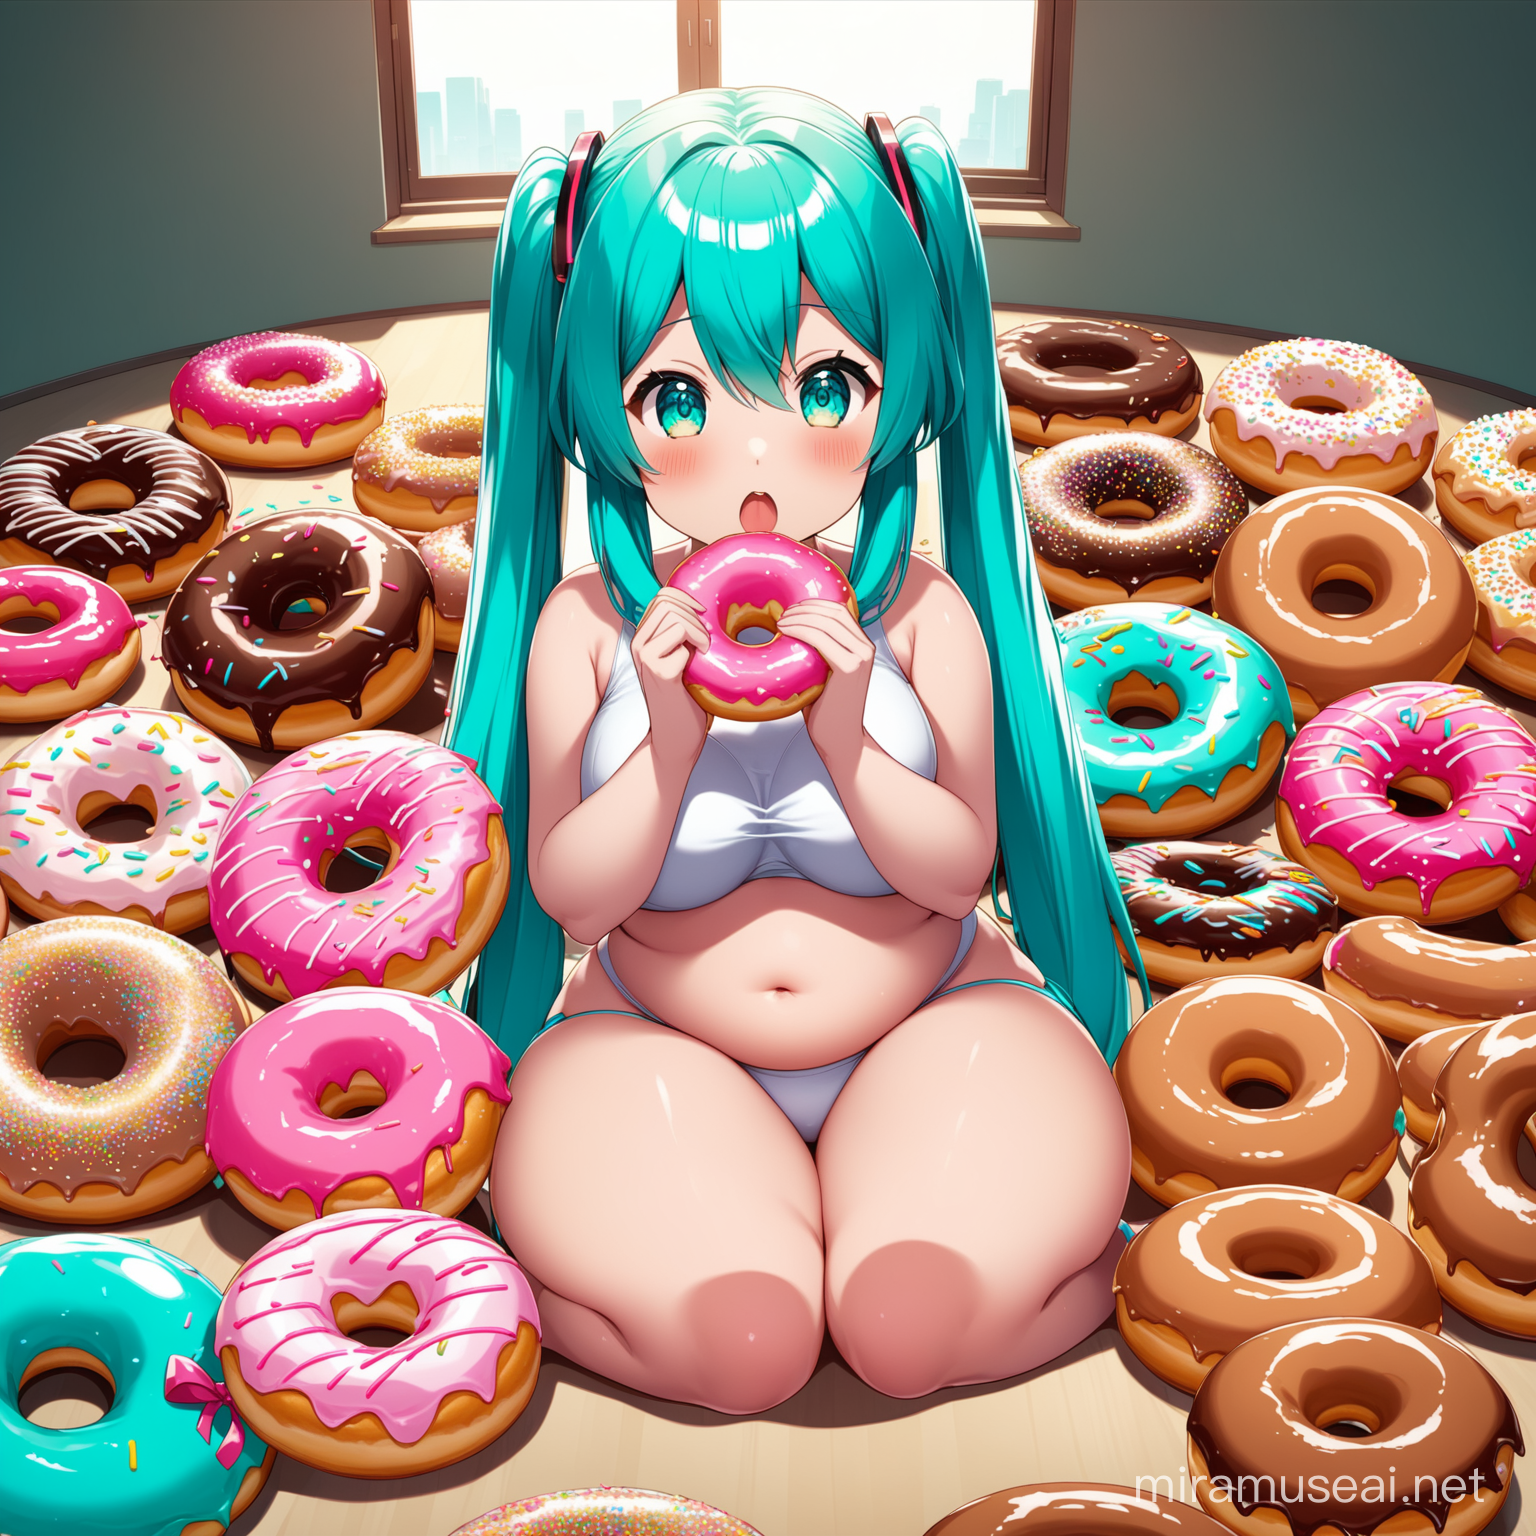 Cheerful Hatsune Miku and Friends Enjoying a Donut Feast in a Vibrant Donut Wonderland